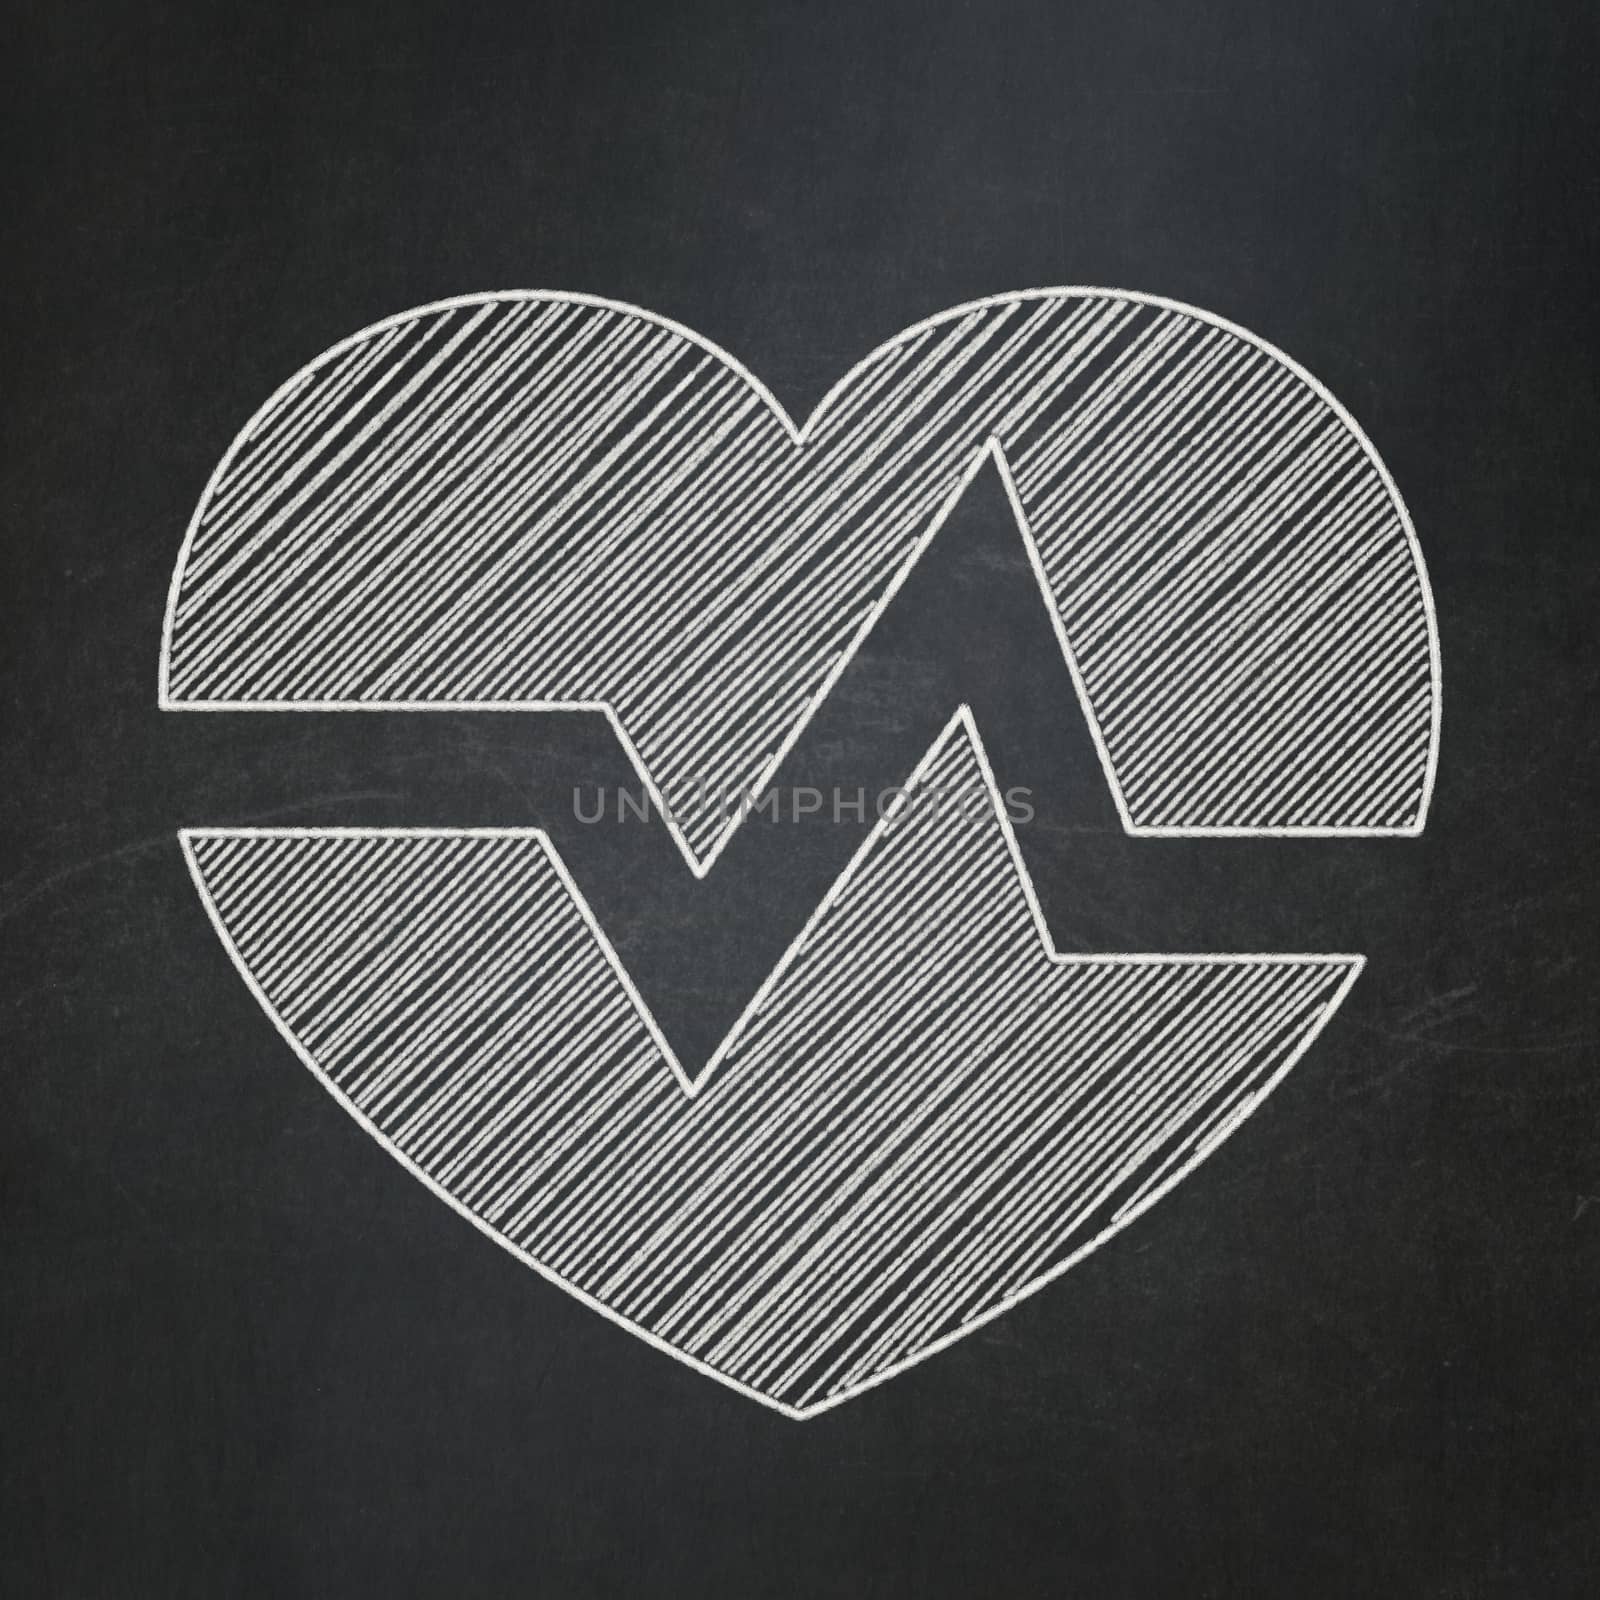 Health concept: Heart on chalkboard background by maxkabakov